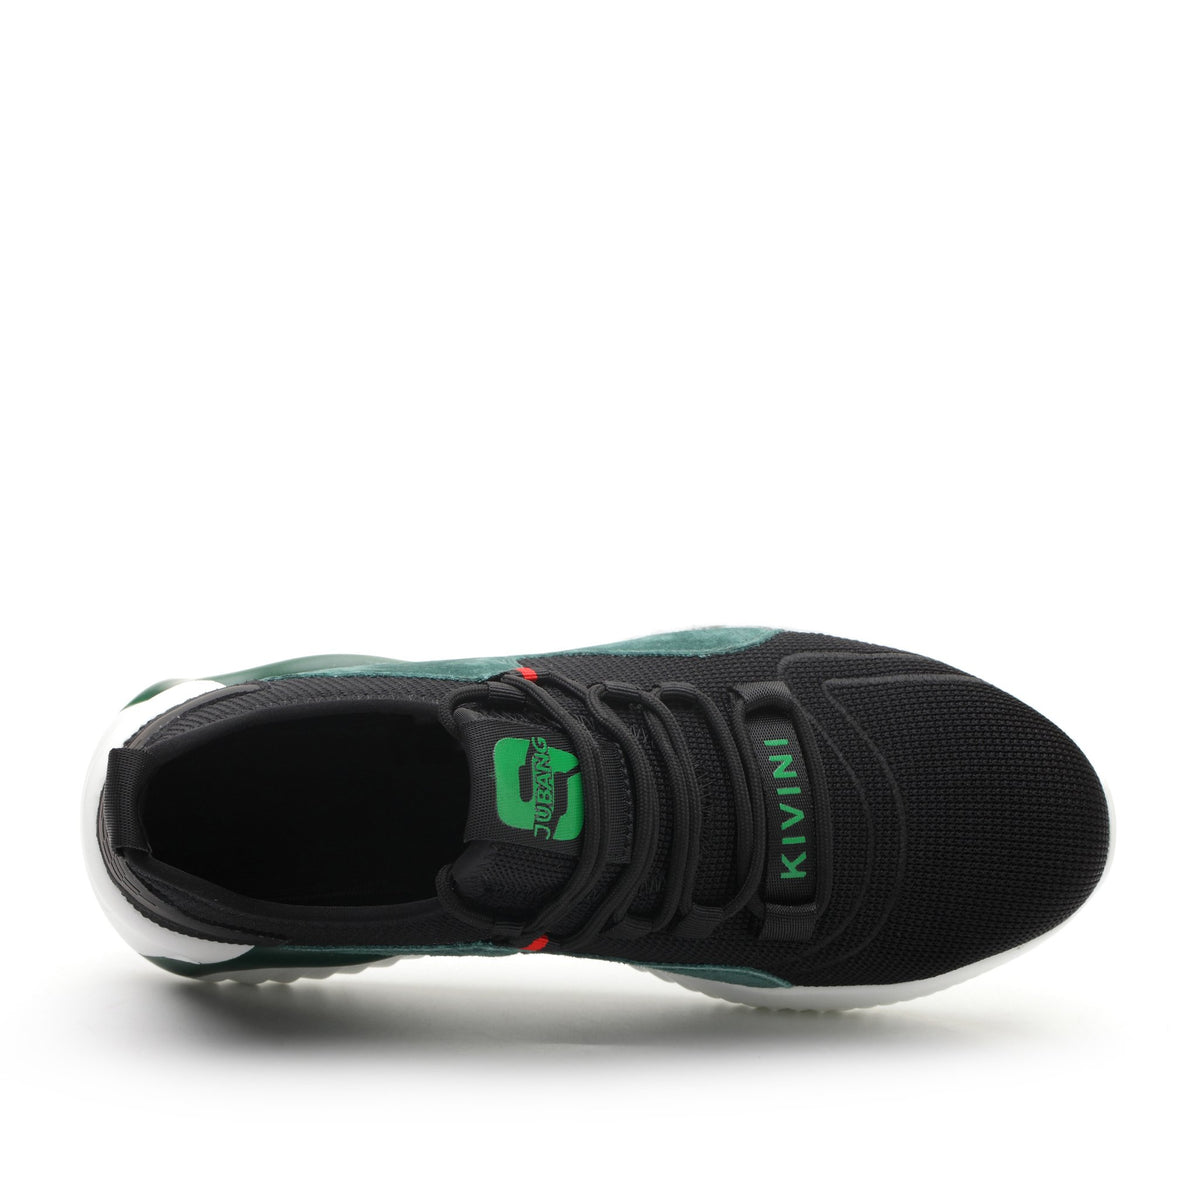 Kivini Black Green - Indestructible Shoes